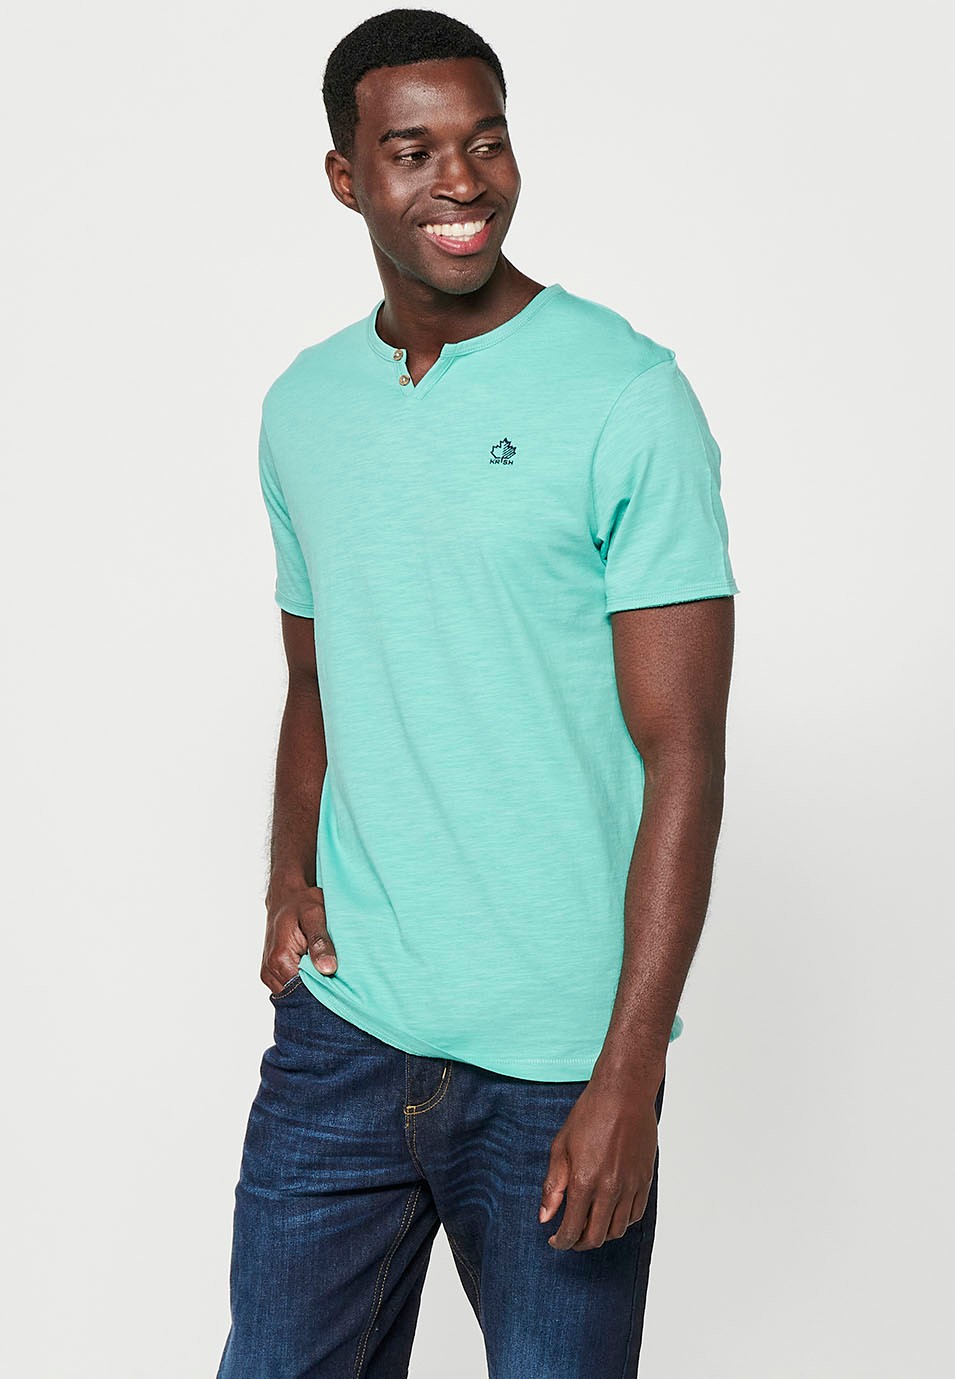 Basic short-sleeved cotton t-shirt, V-neck with button, mint color for men